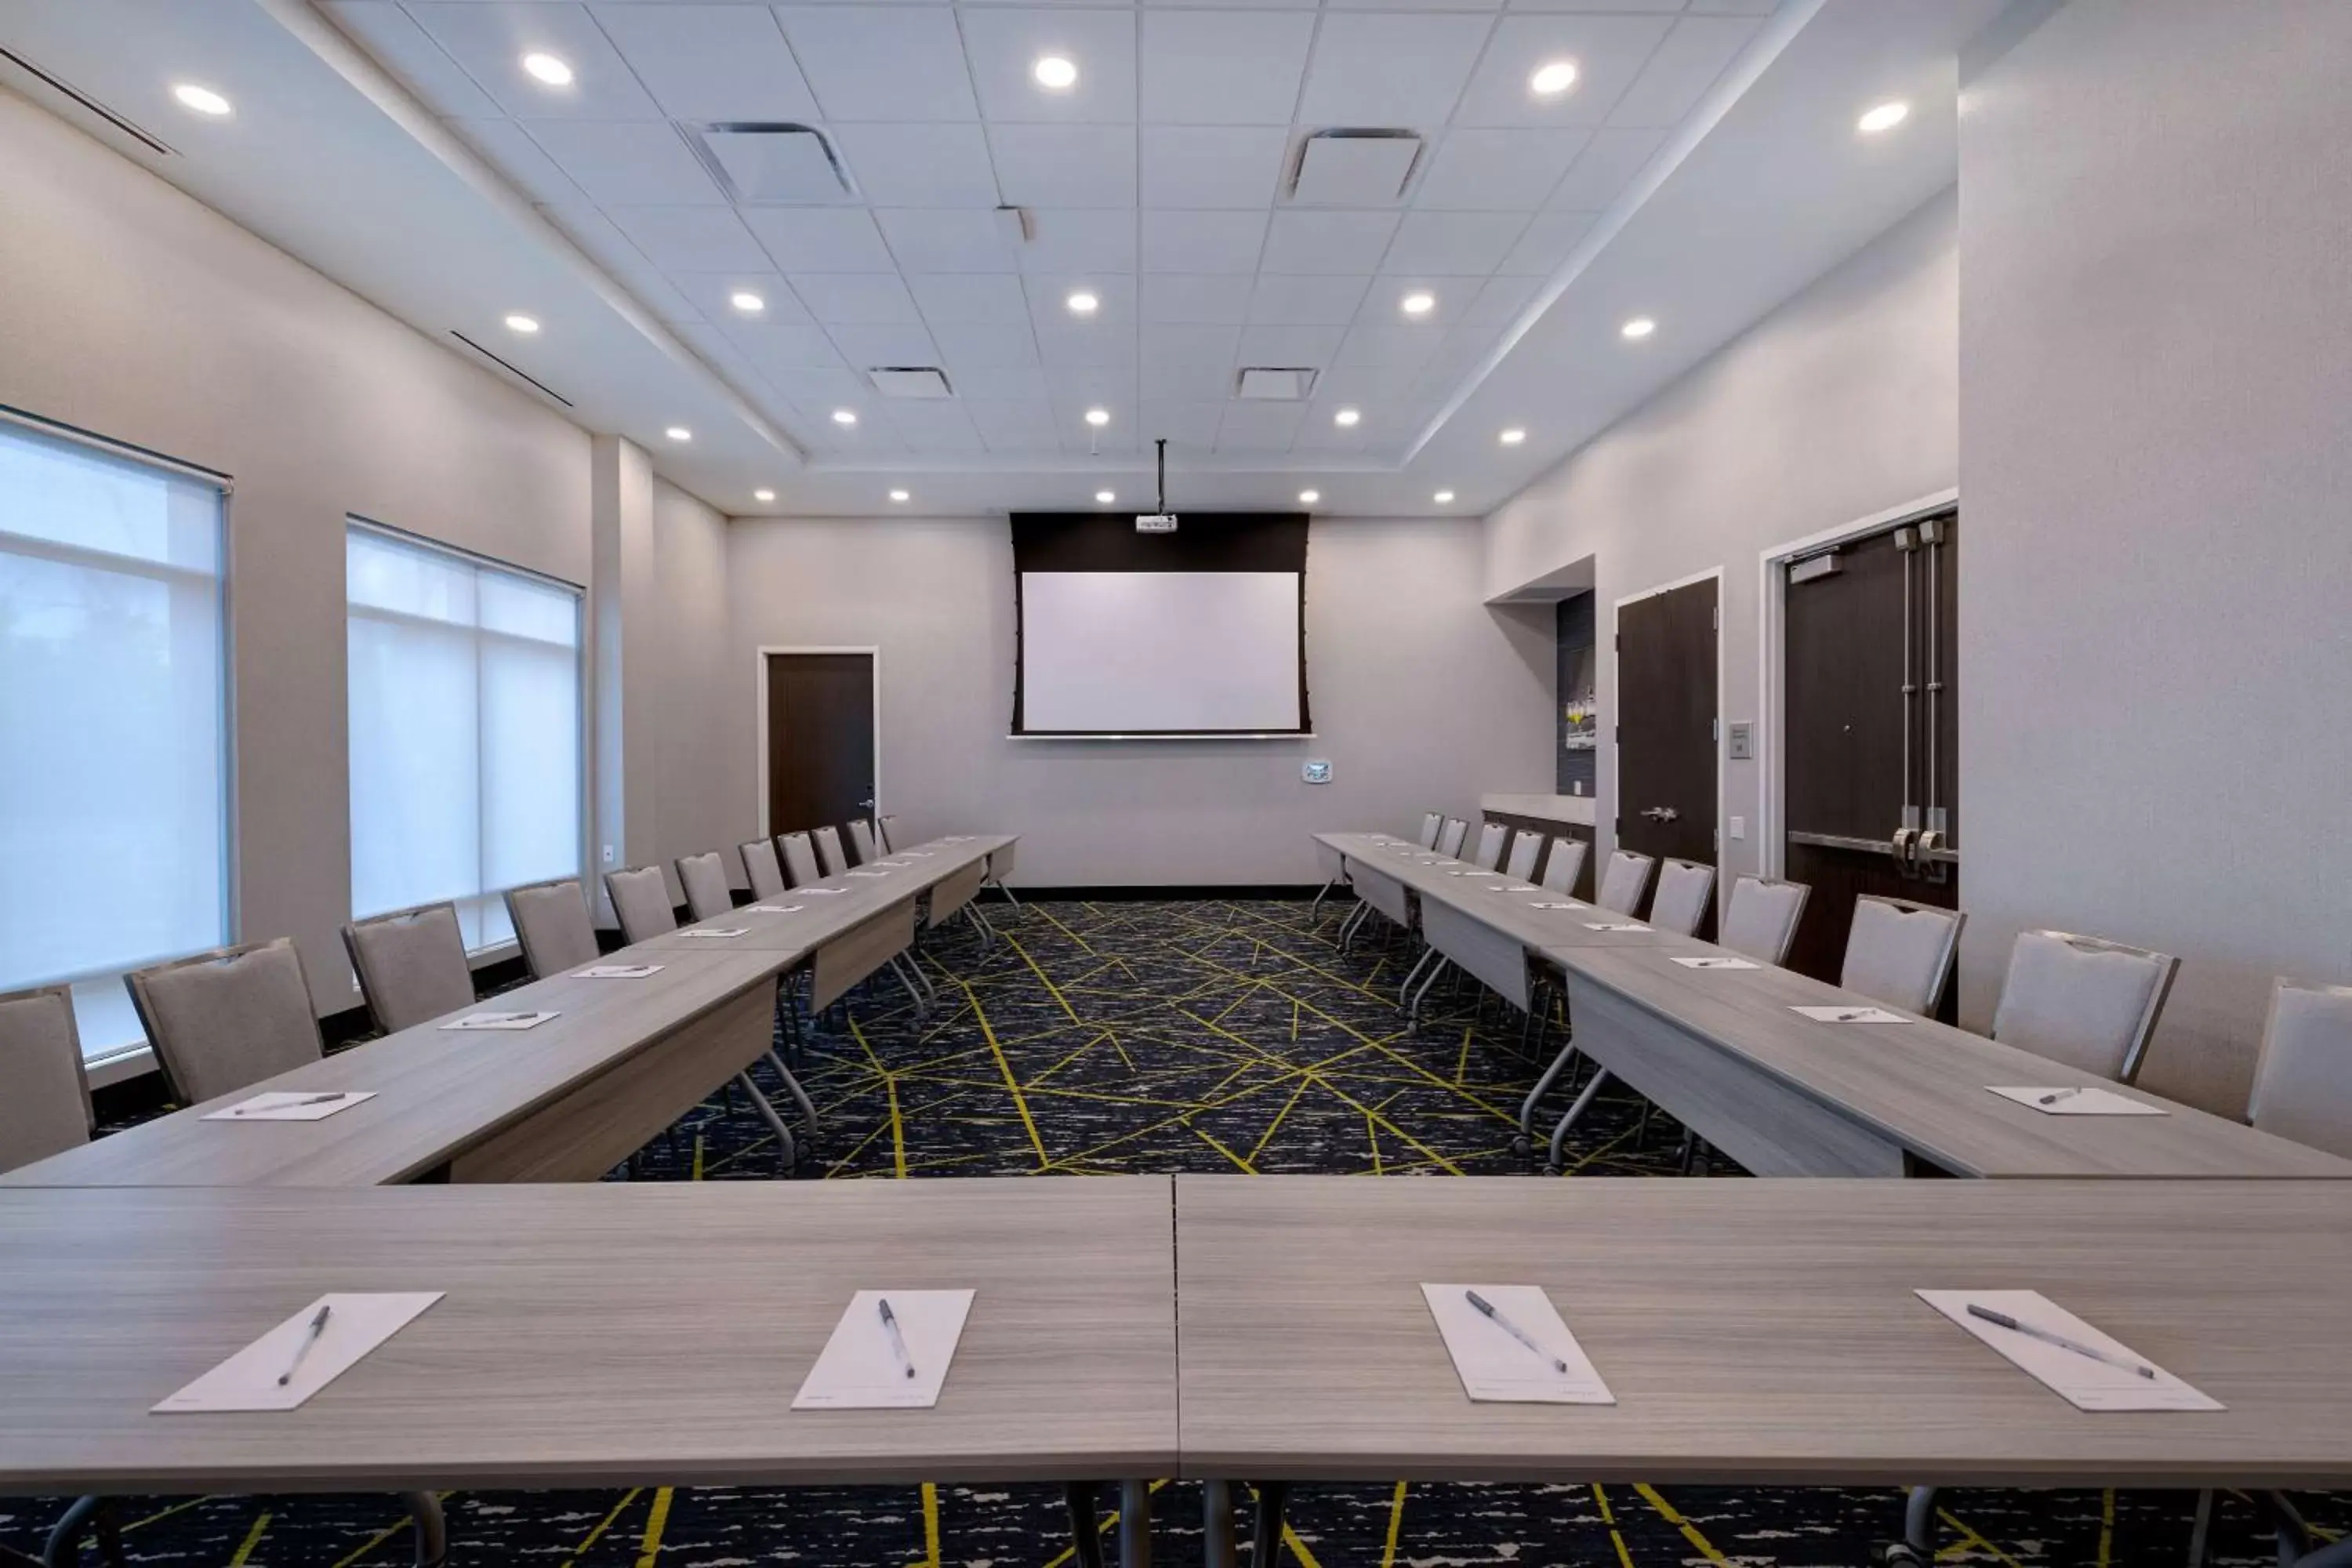 Meeting/conference room in Hampton Inn & Suites Burlington, Ontario, Canada